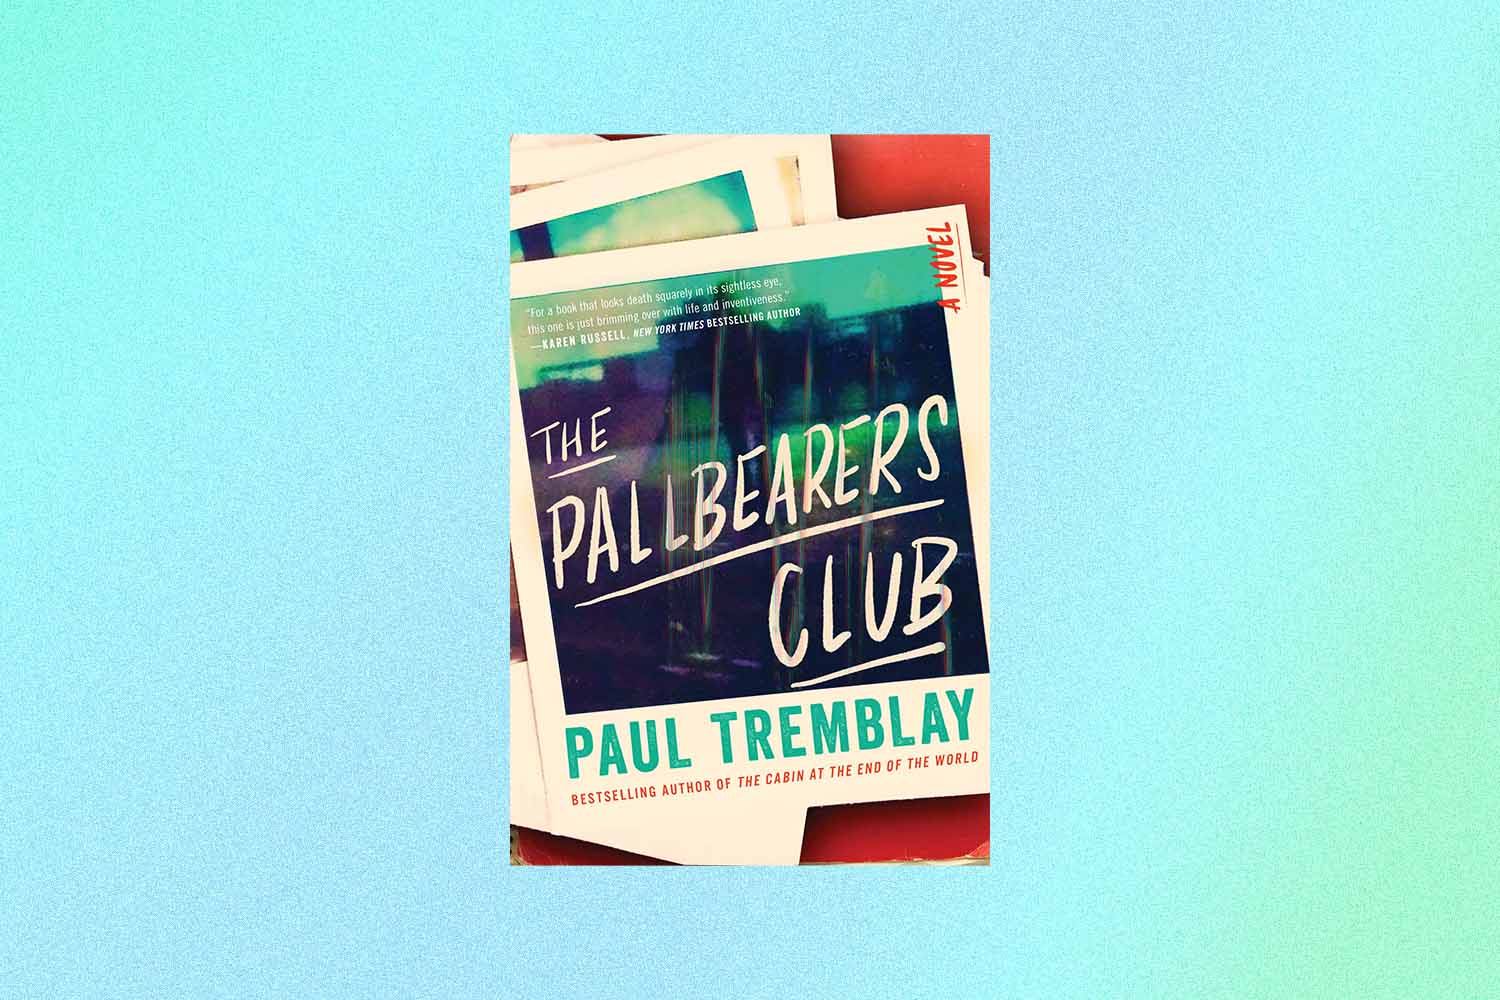 cover of "The Pallbearers Club"